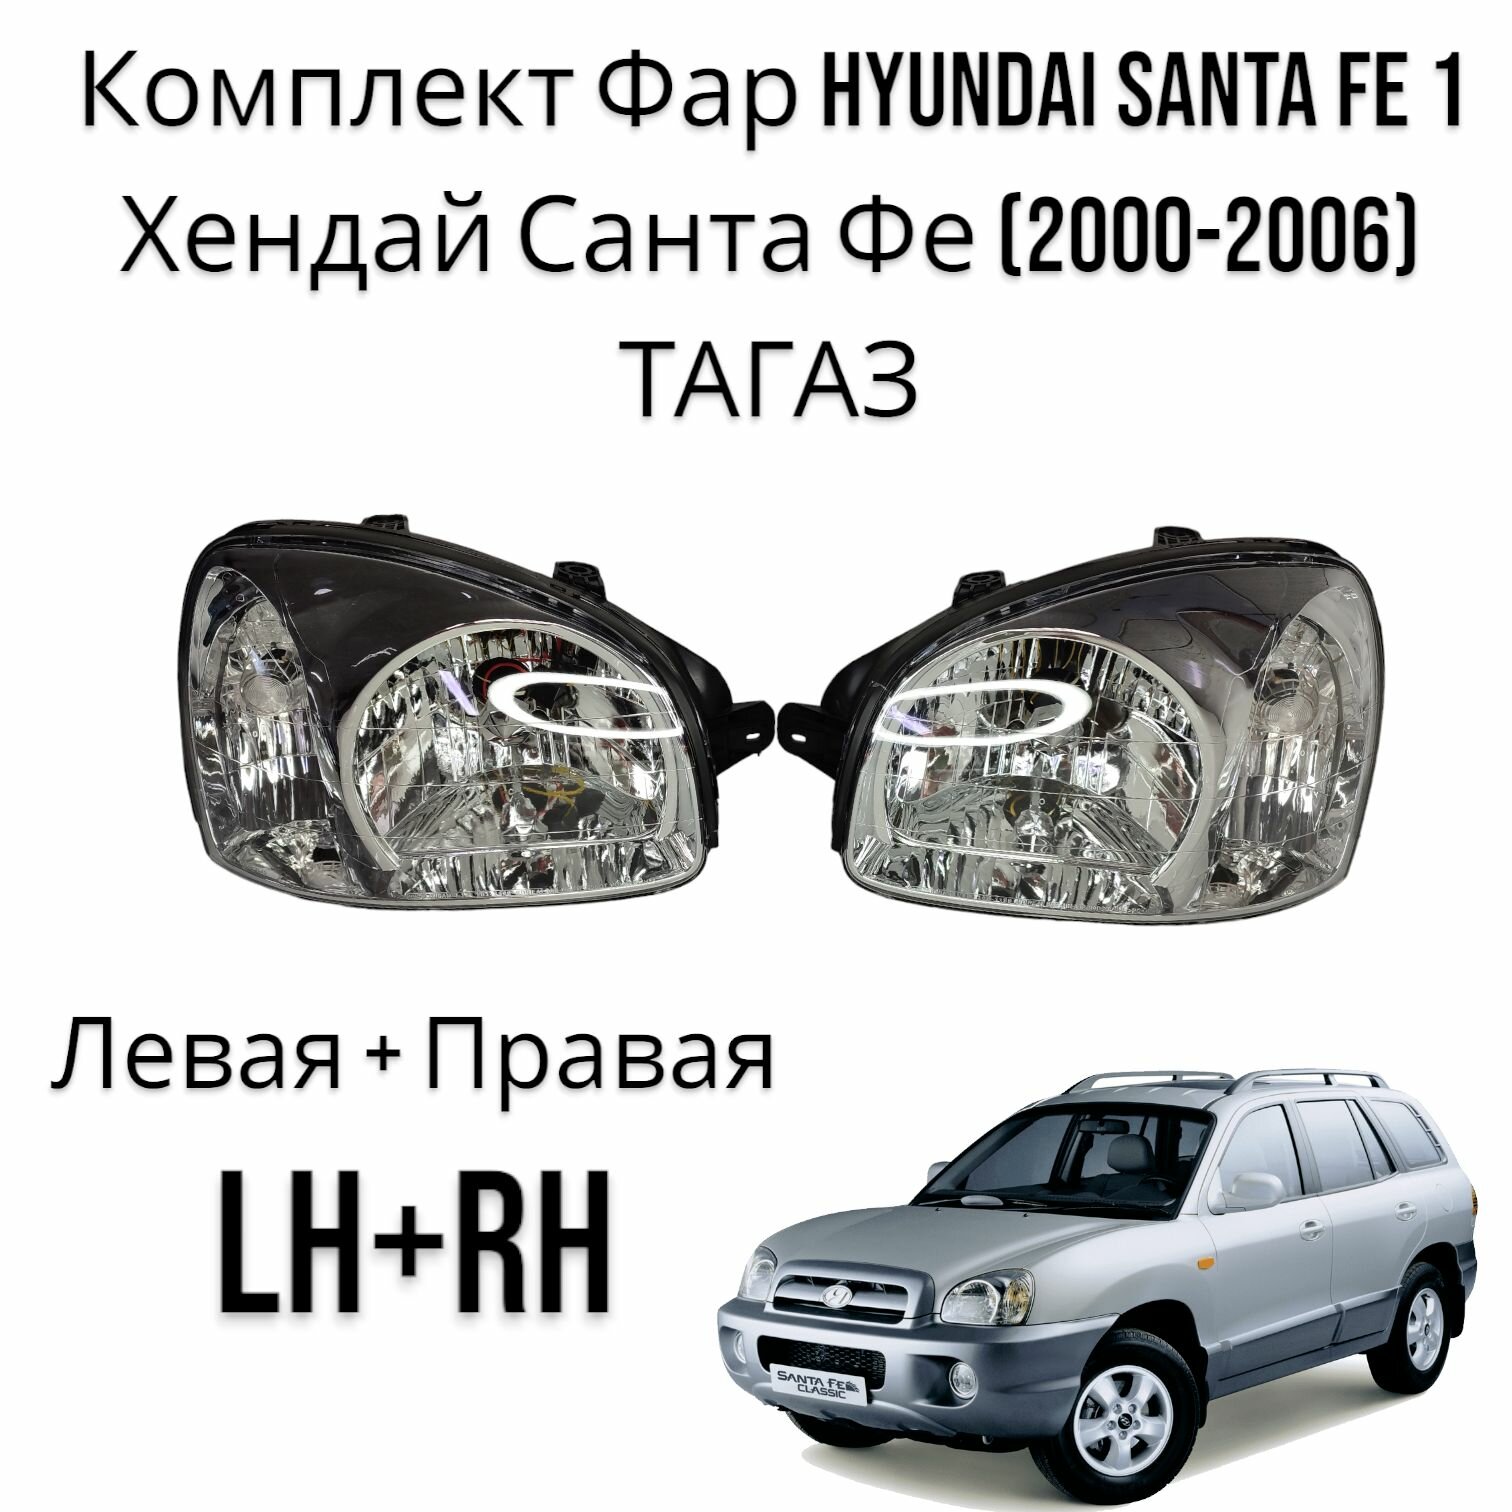 Комплект Фара Hyundai Santa Fe 1 Хендай Санта Фе (2000-2006) тагаз Левая + Правая